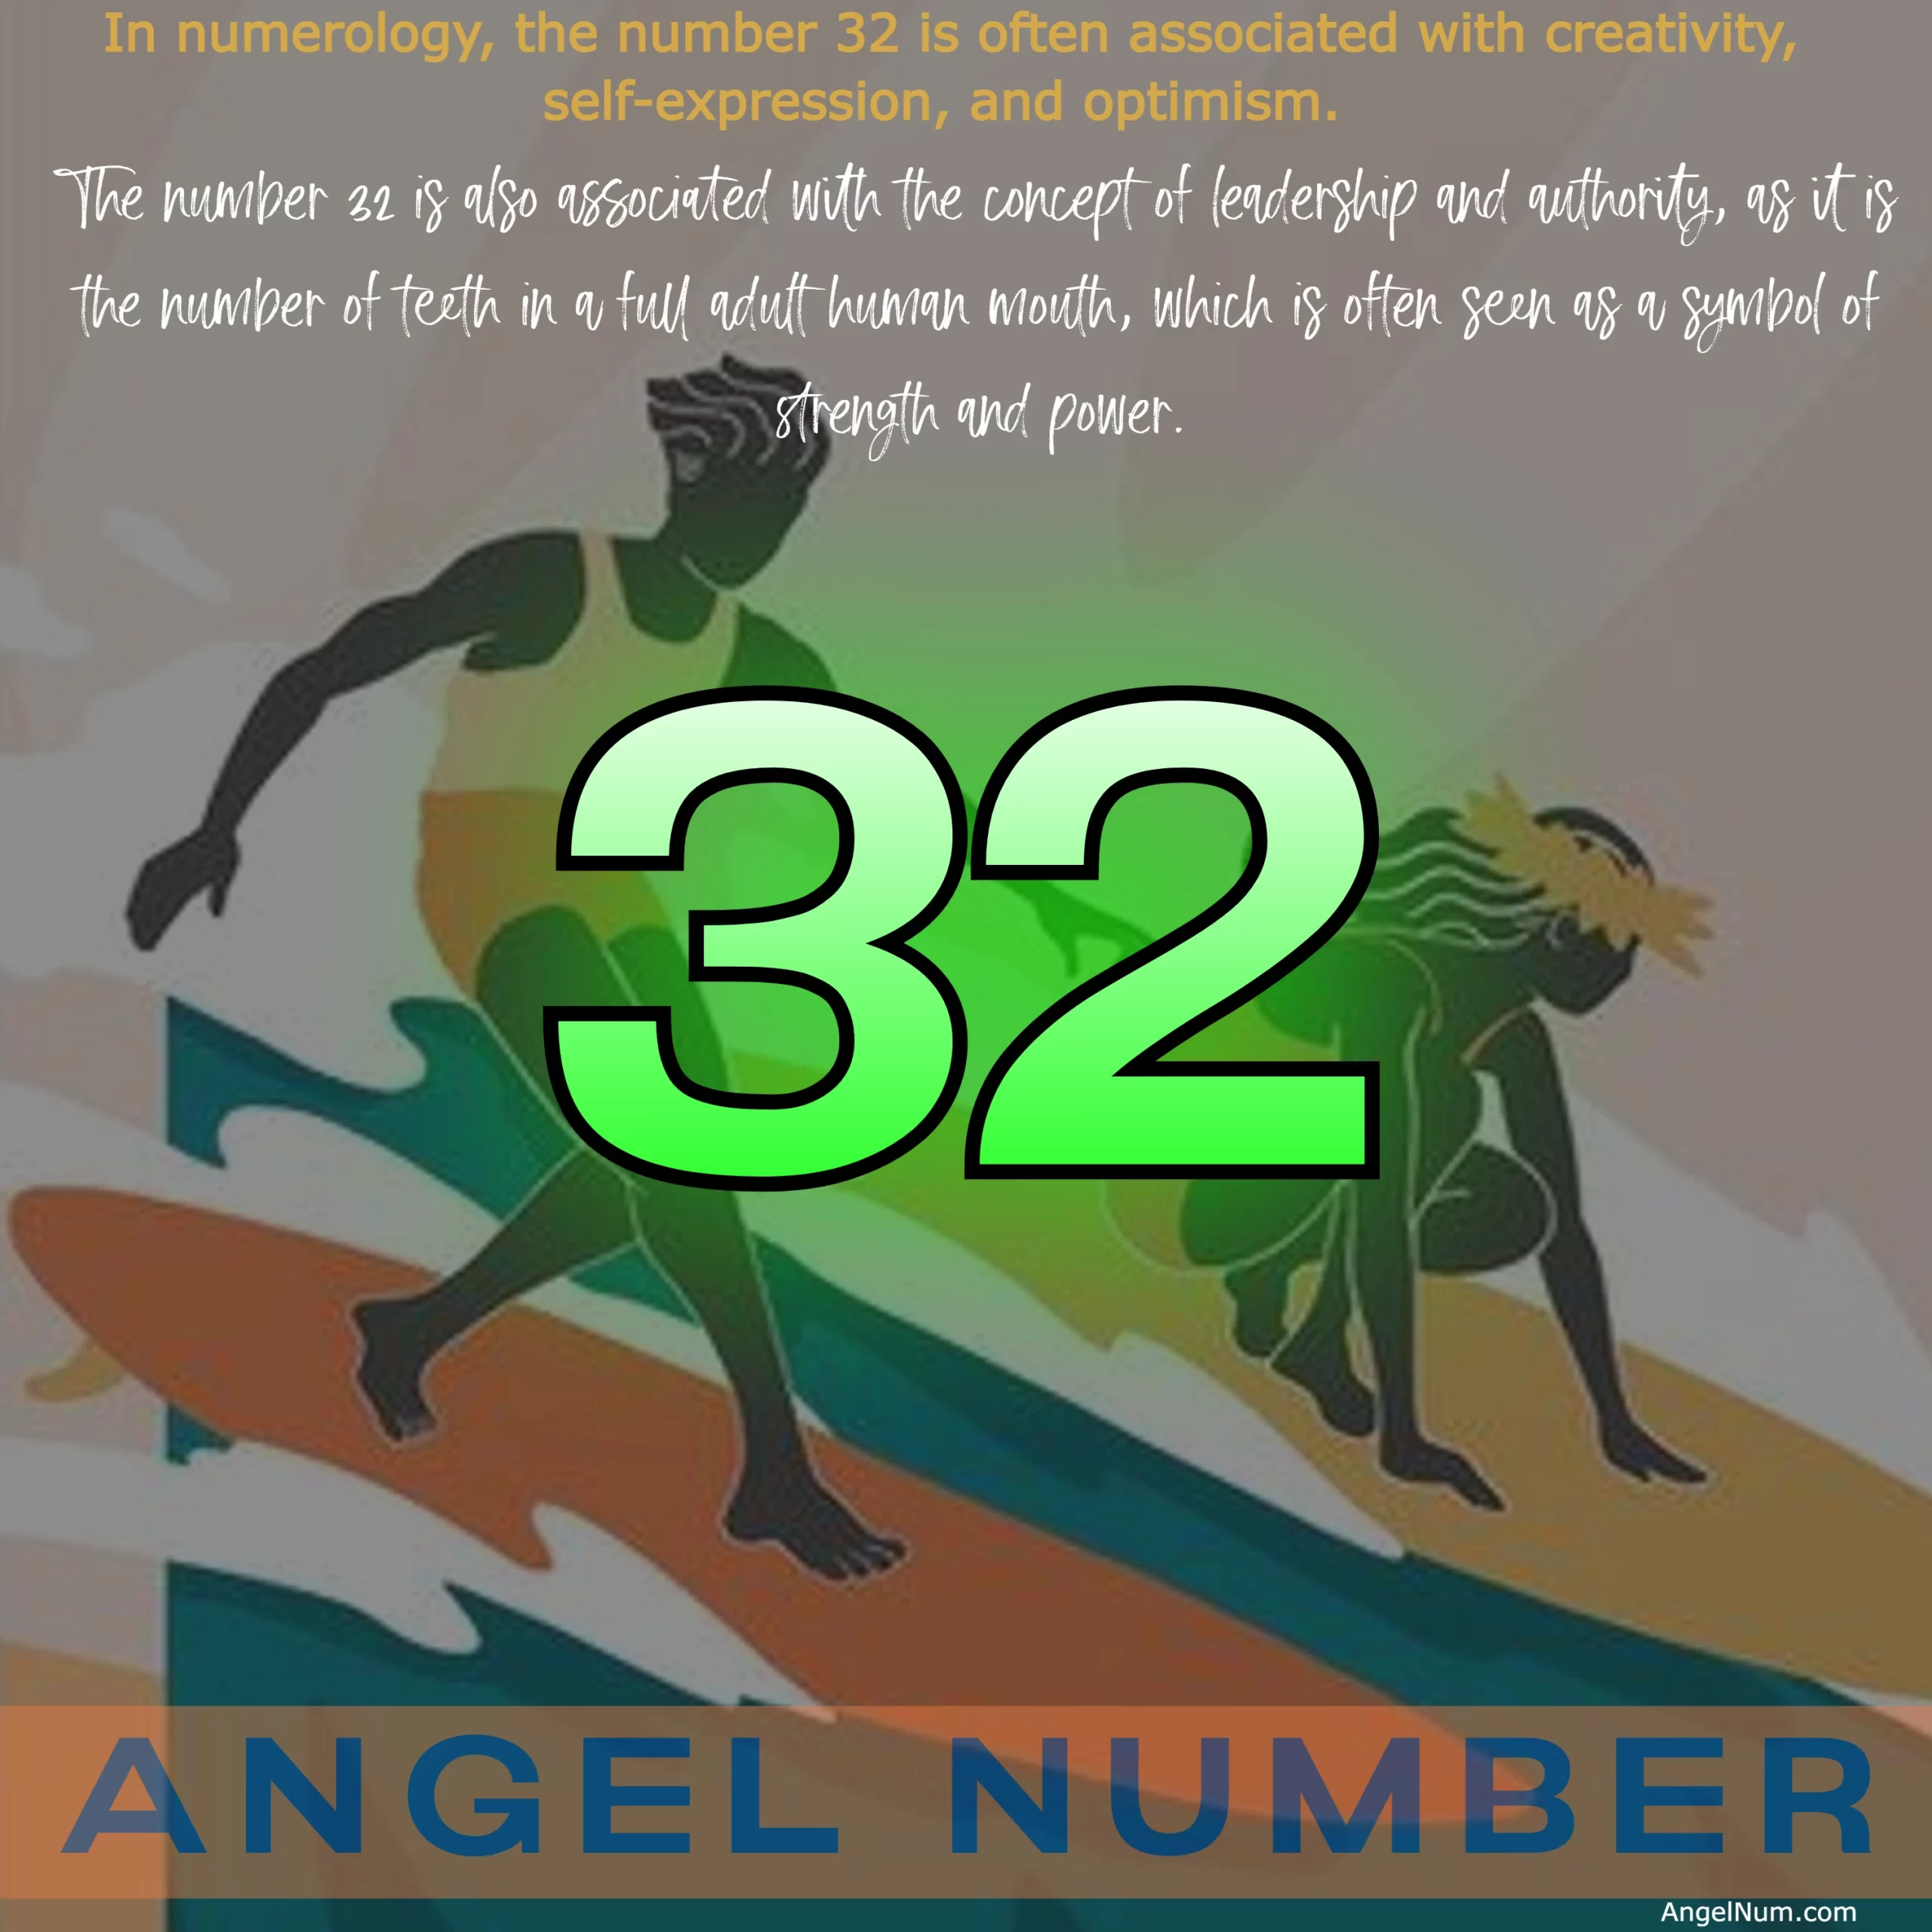 Angel number 32 represents balance, harmony, and creativity